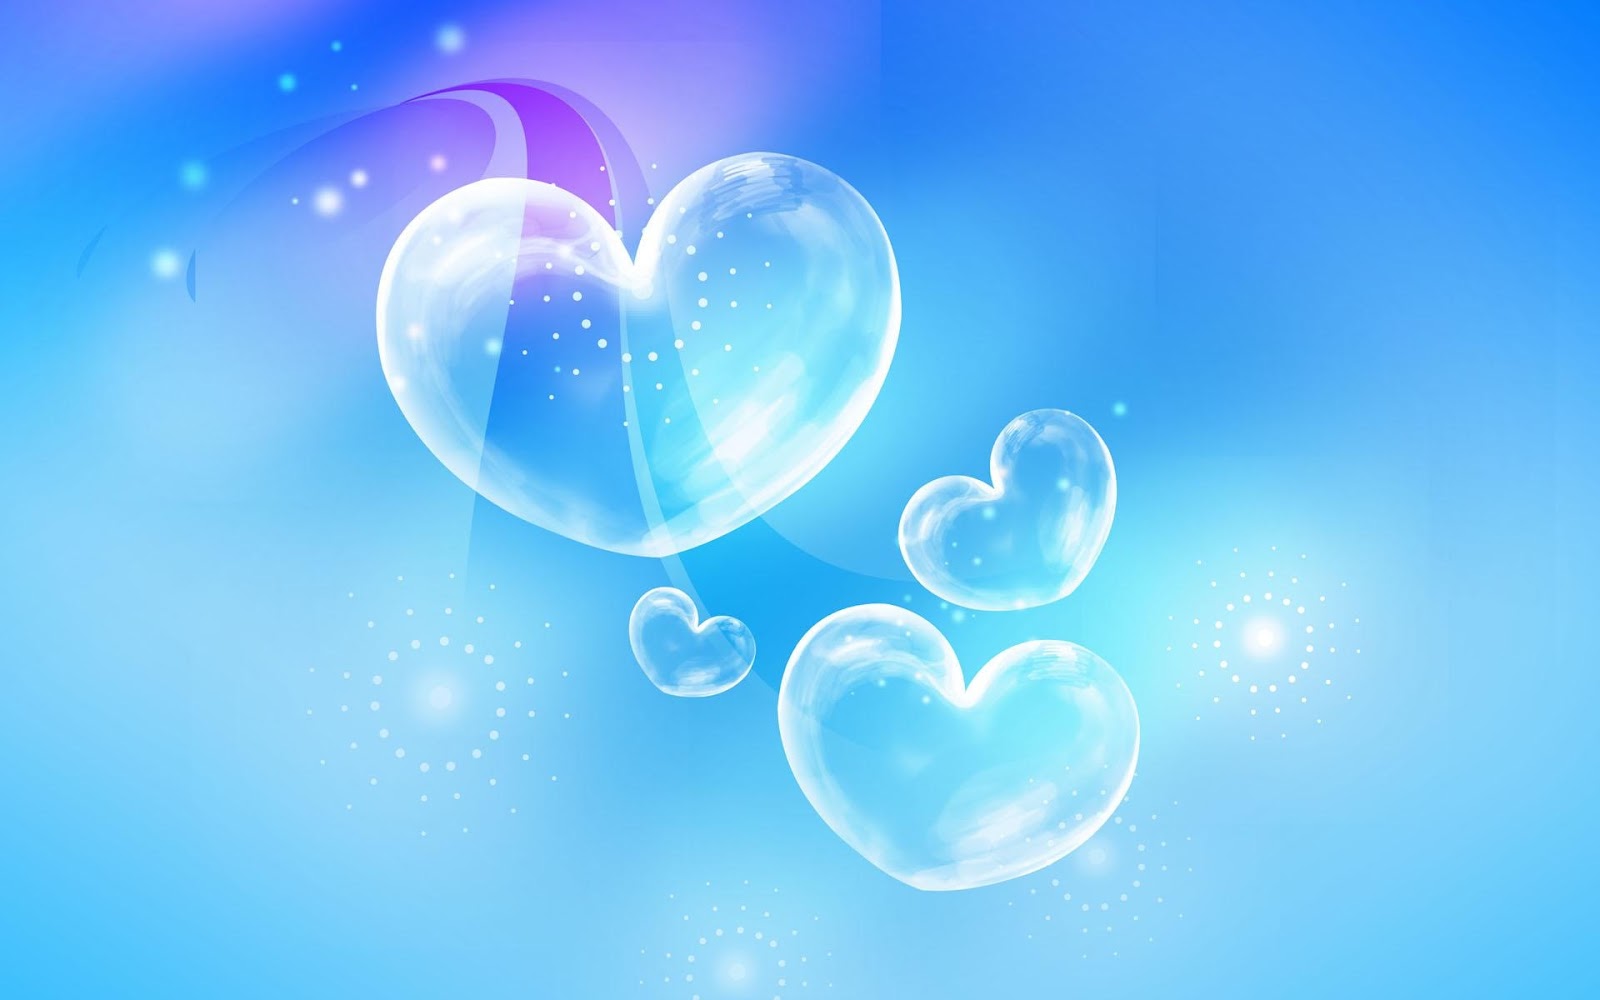 cute blue heart backgrounds